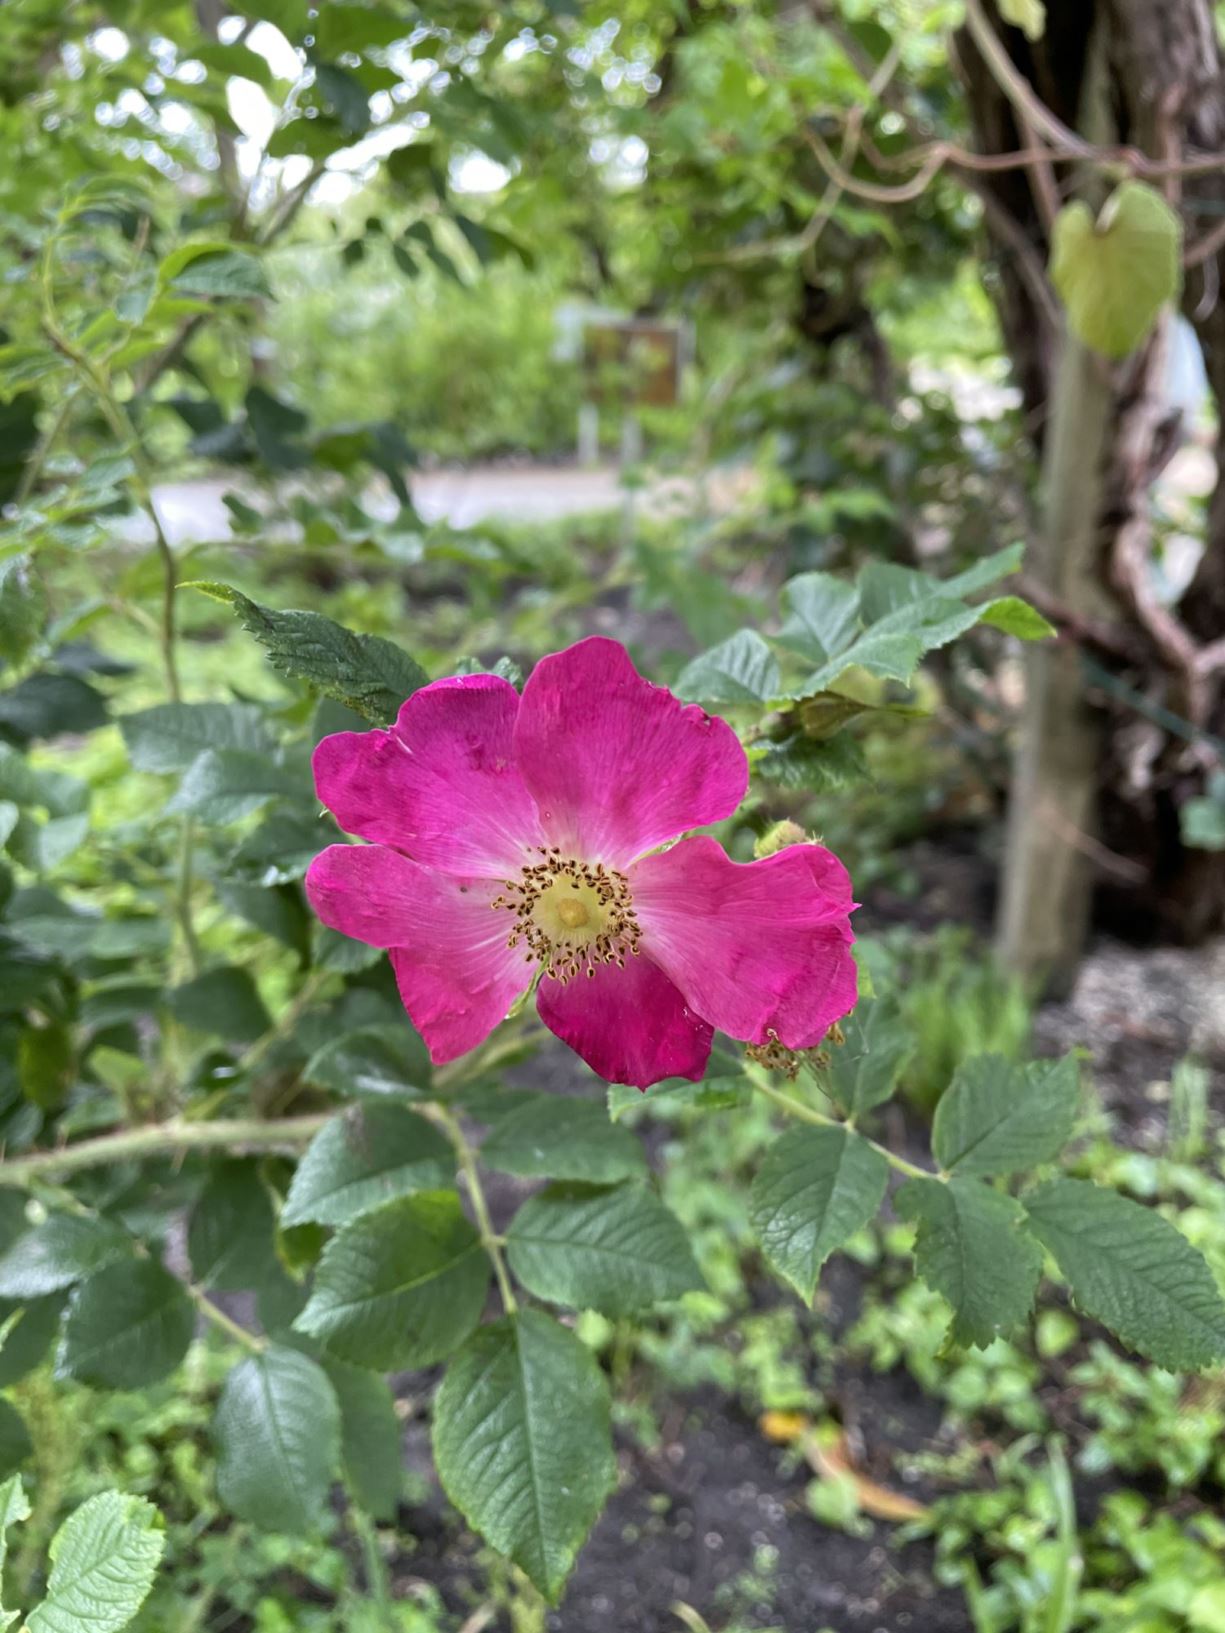 Rosa gymnocarpa - Dwarf rose, baldhip rose, wood rose | Hortus ...